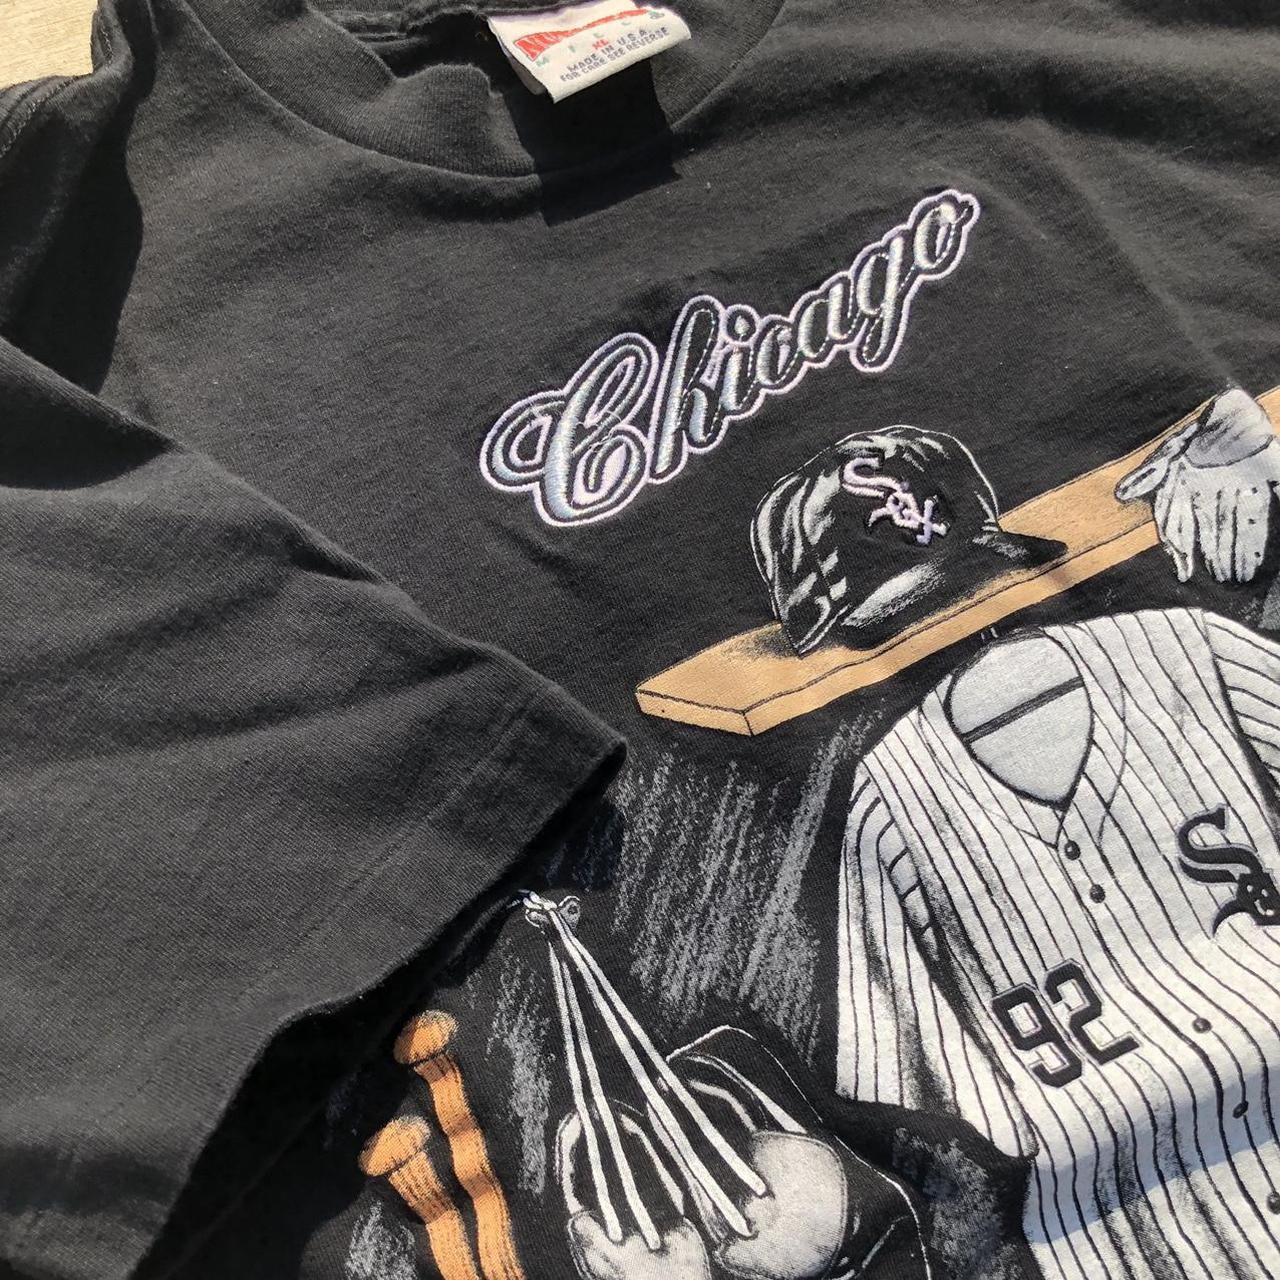 Vintage 90s Nutmeg MLB Chicago White Sox Embroidered T-Shirt Size L